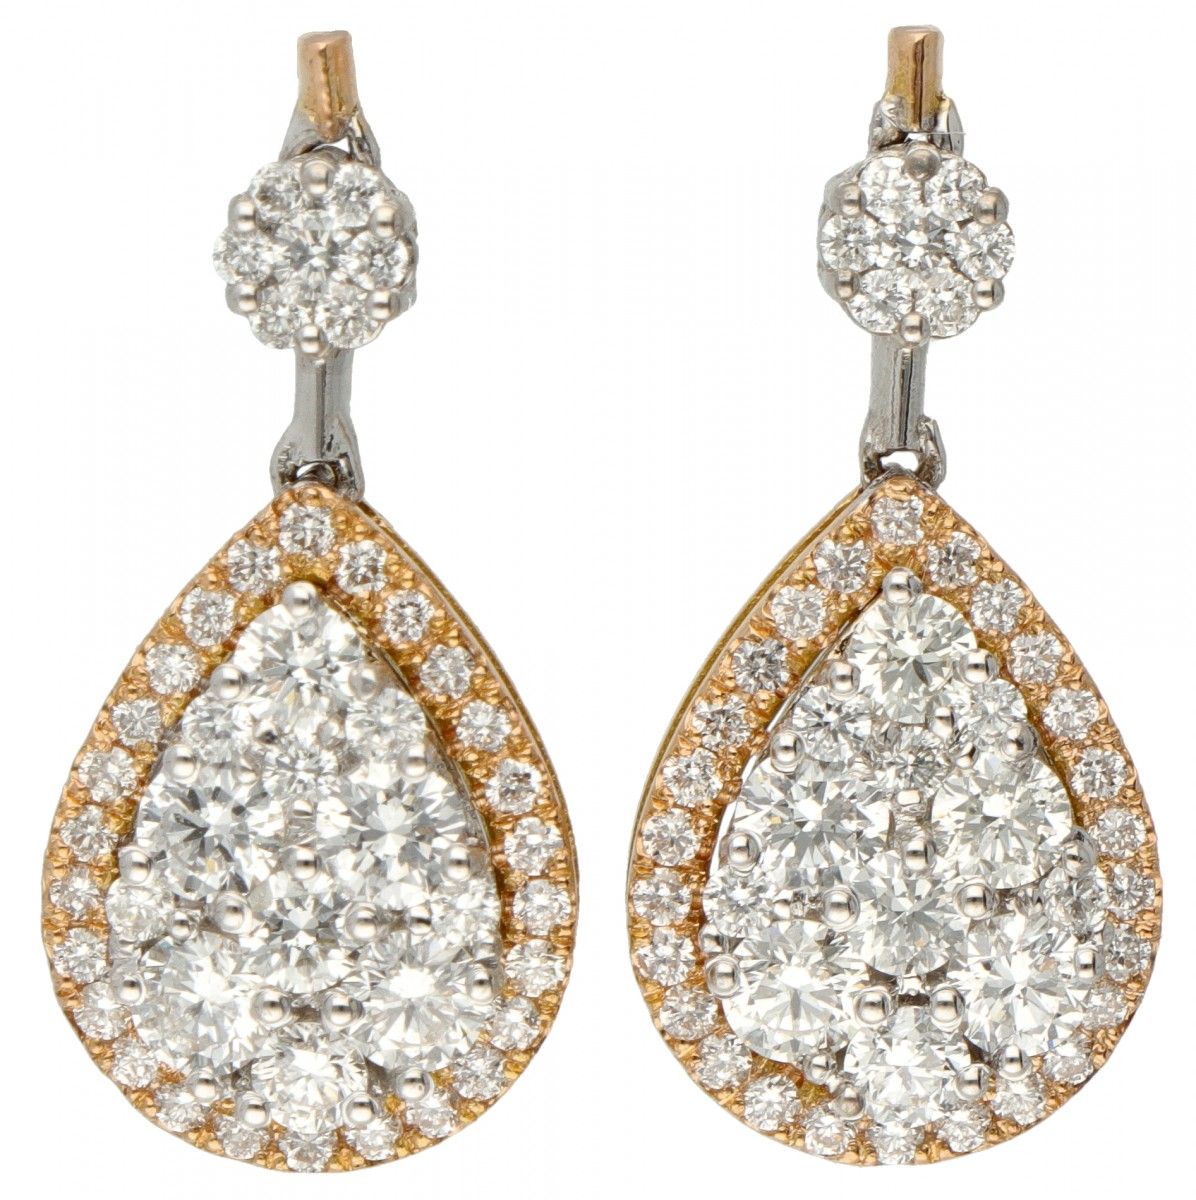 18K. Bicolor gold entourage earrings set with approx. 1.54 ct. Diamond. Hallmark&hellip;